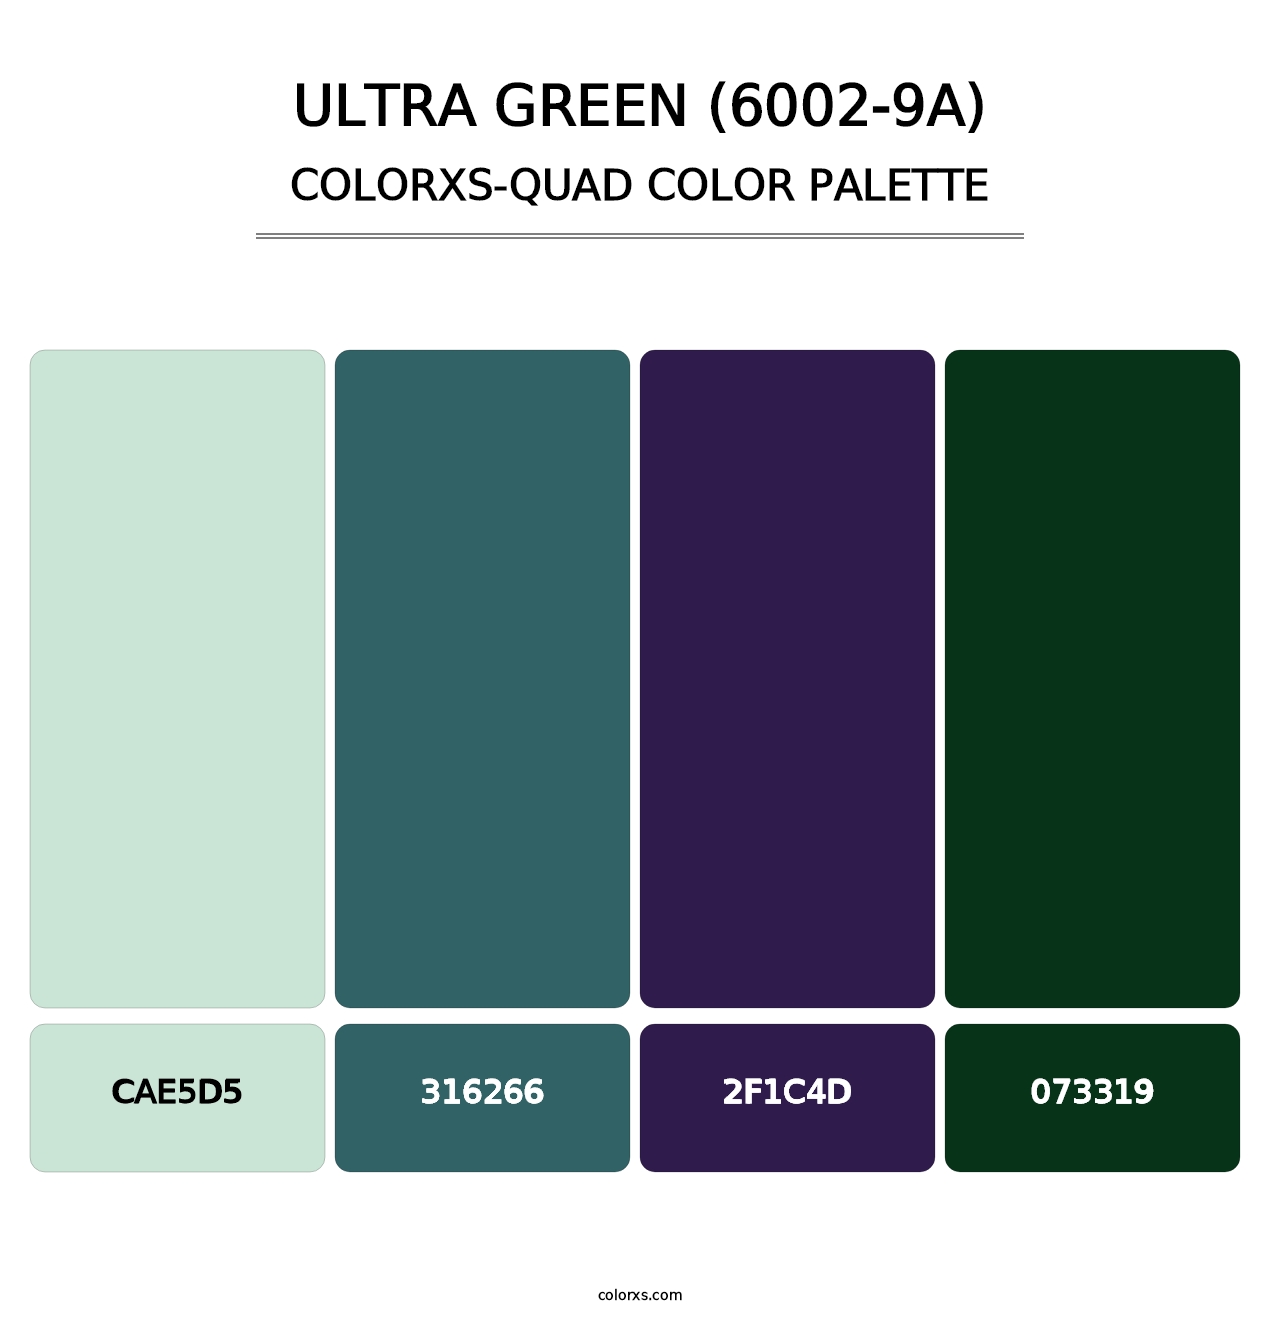 Ultra Green (6002-9A) - Colorxs Quad Palette